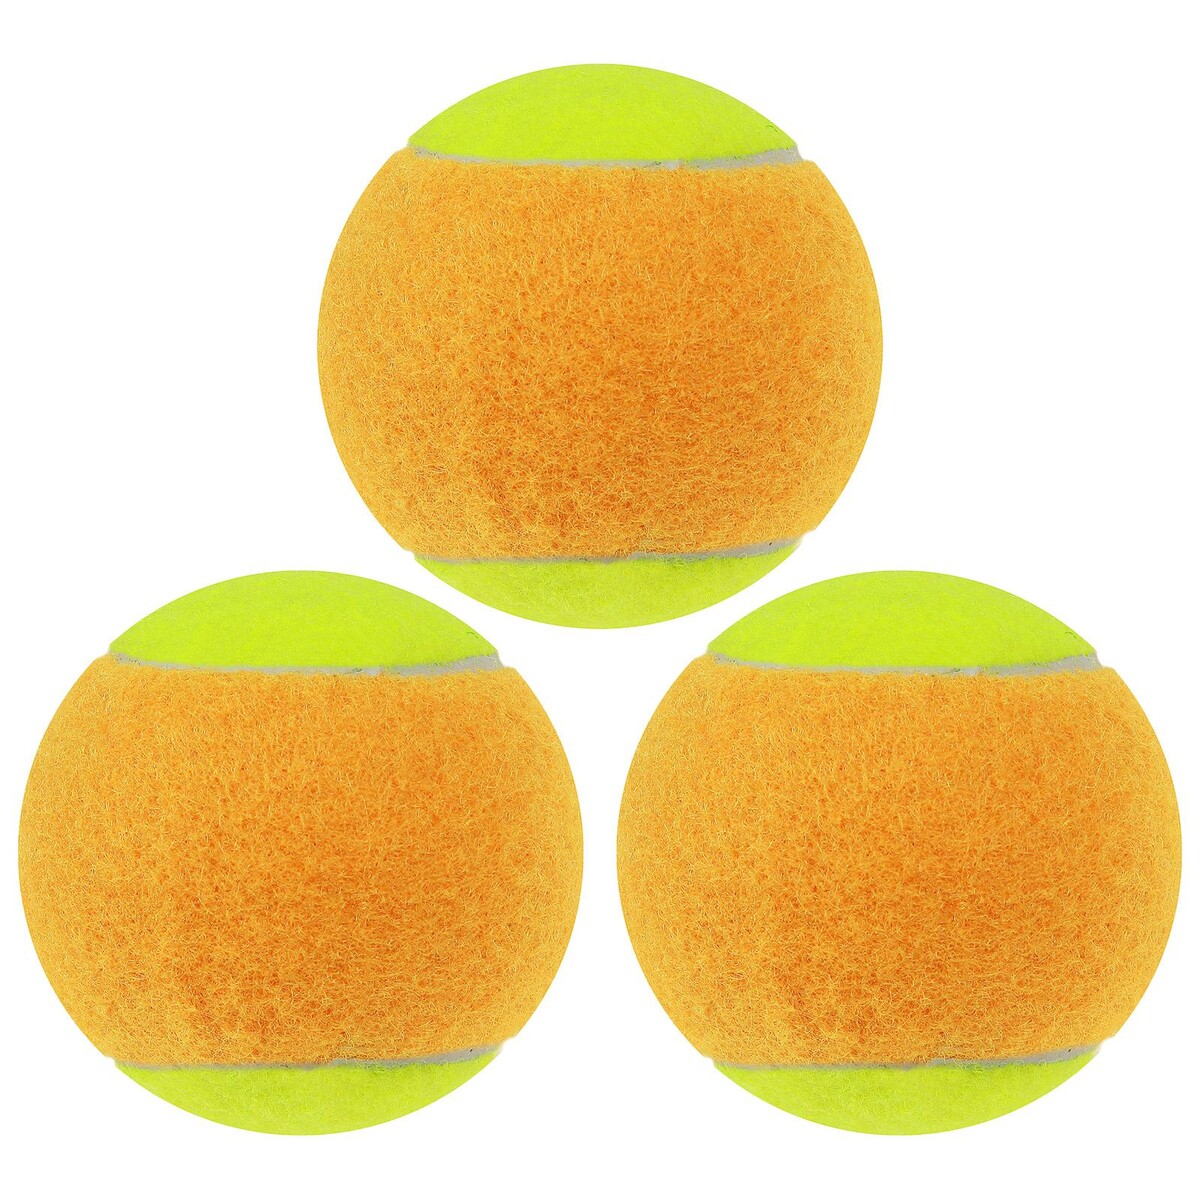 Набор мячей для большого тенниса onlytop swidon, 3 шт. набор мячей для настольного тенниса onlytop d 40 мм 6 шт белый